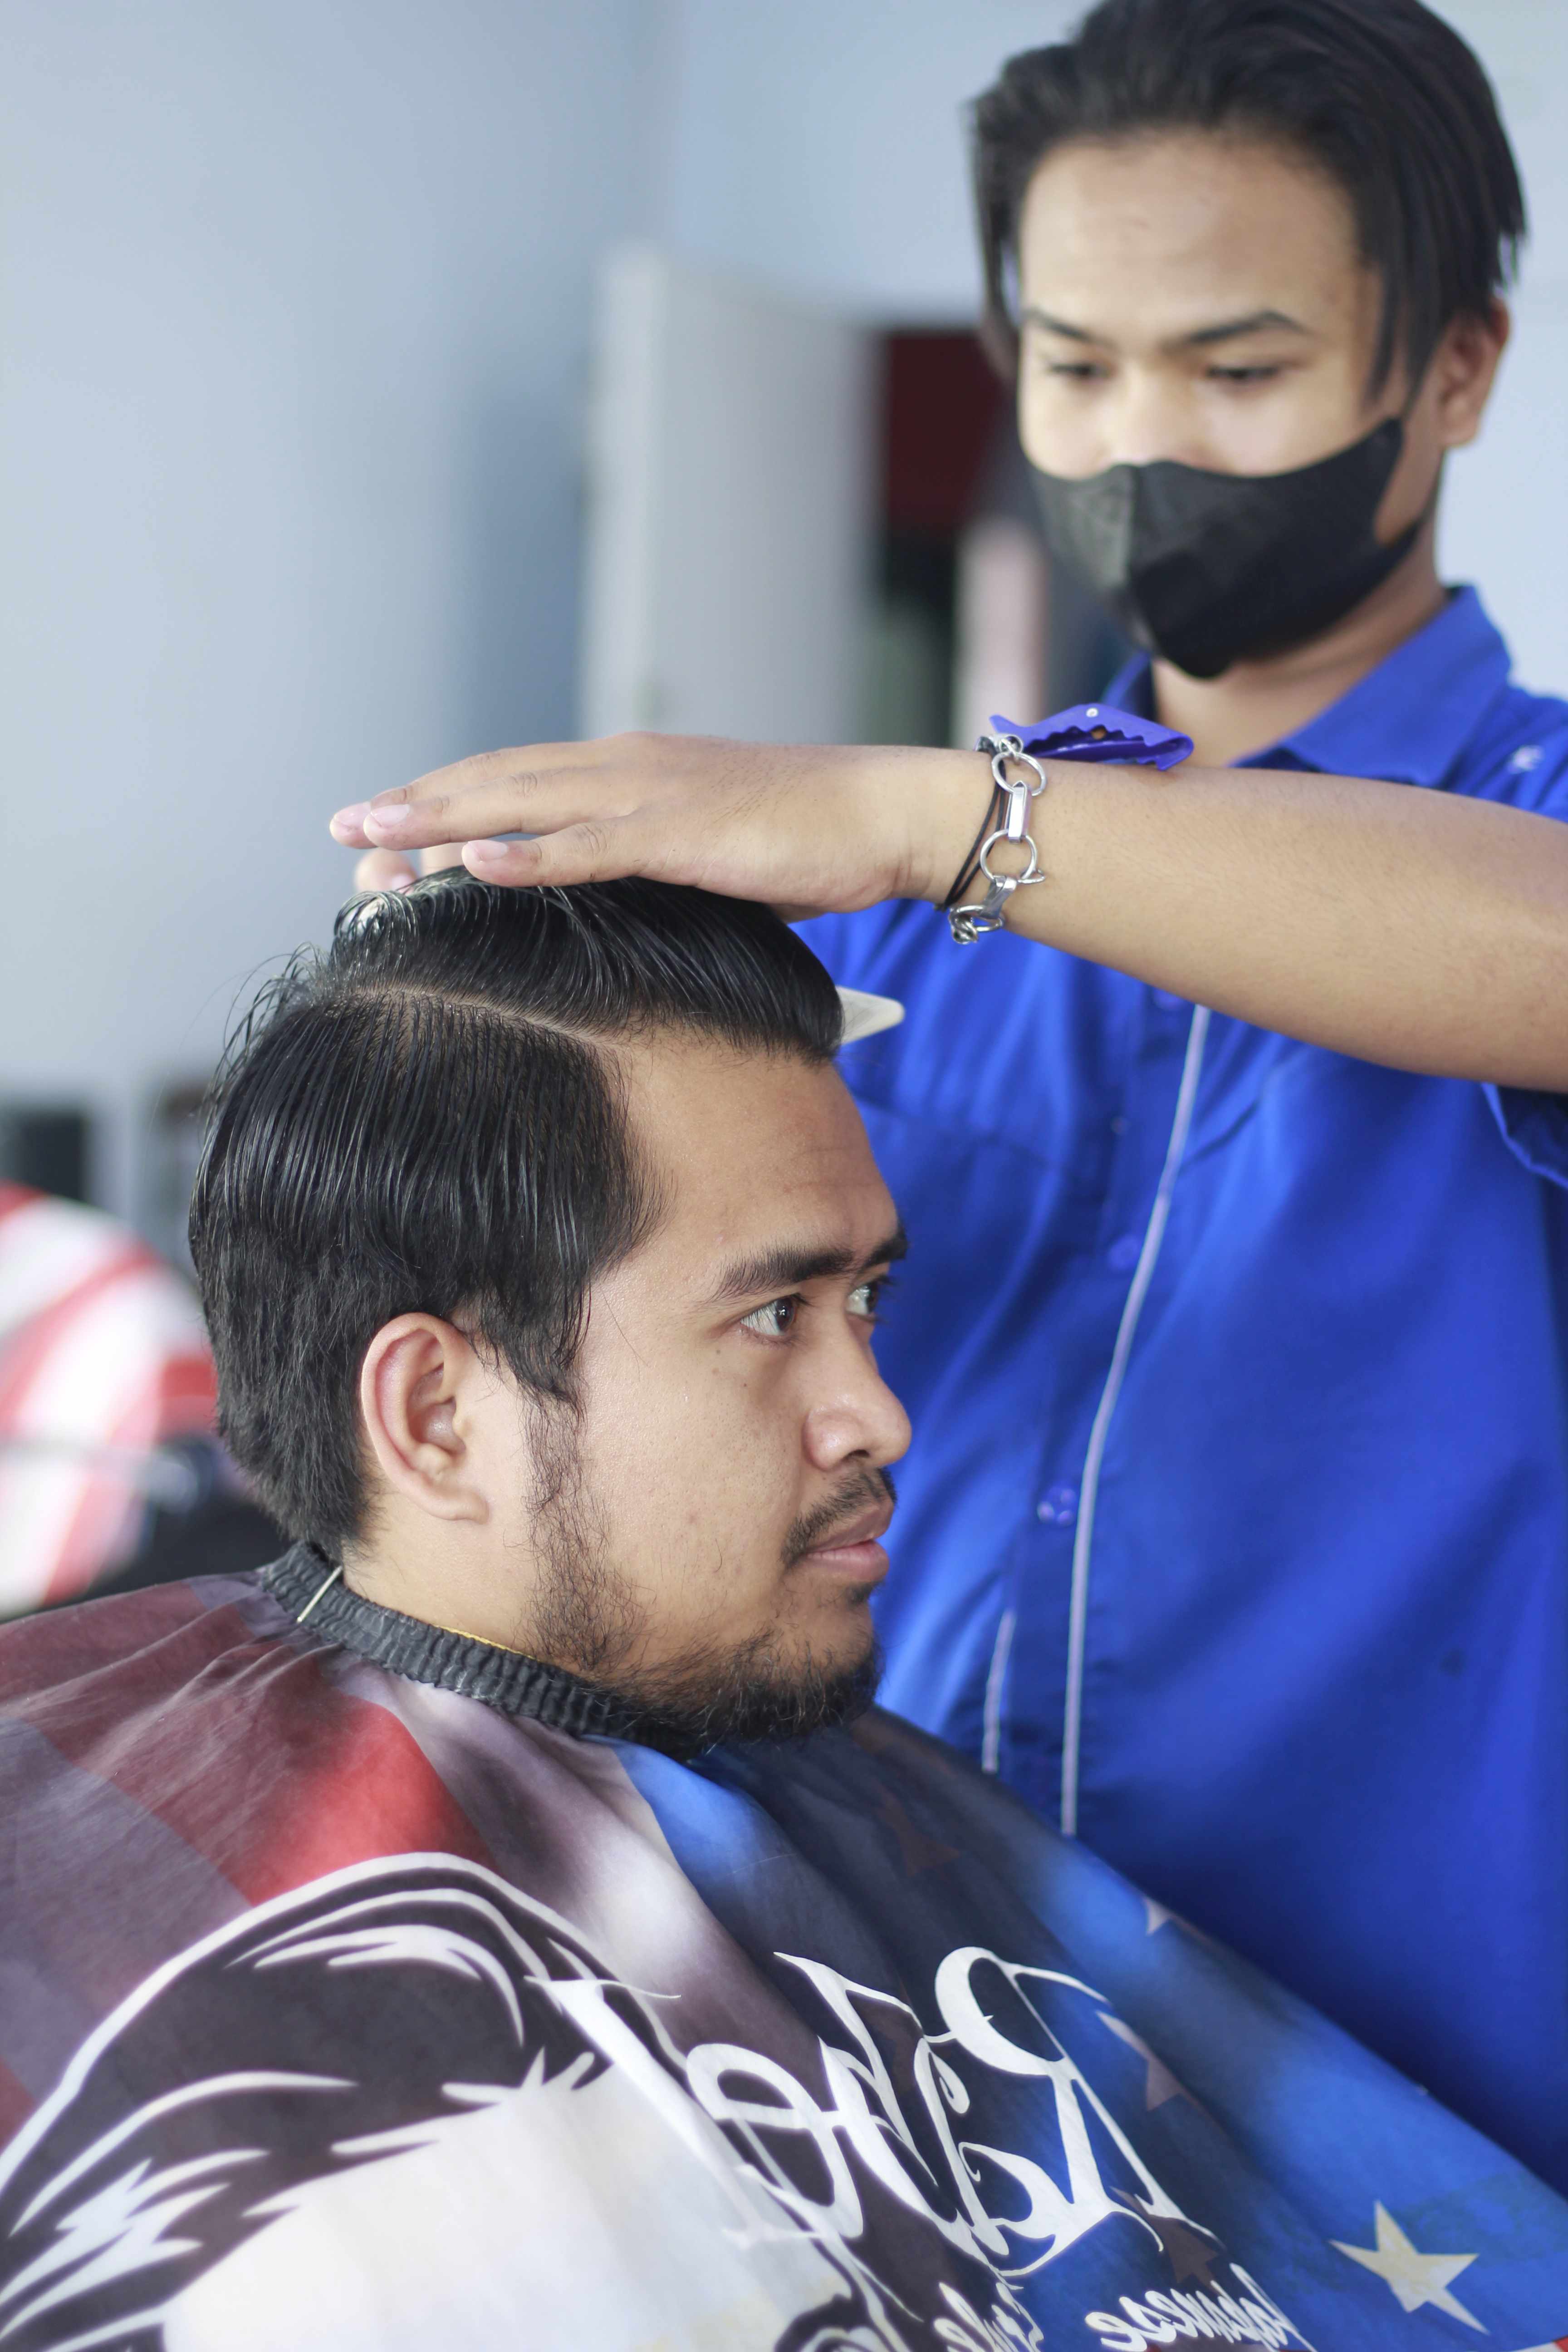 Lokasi Tempat Barbershop Di Kota Malang Profesional